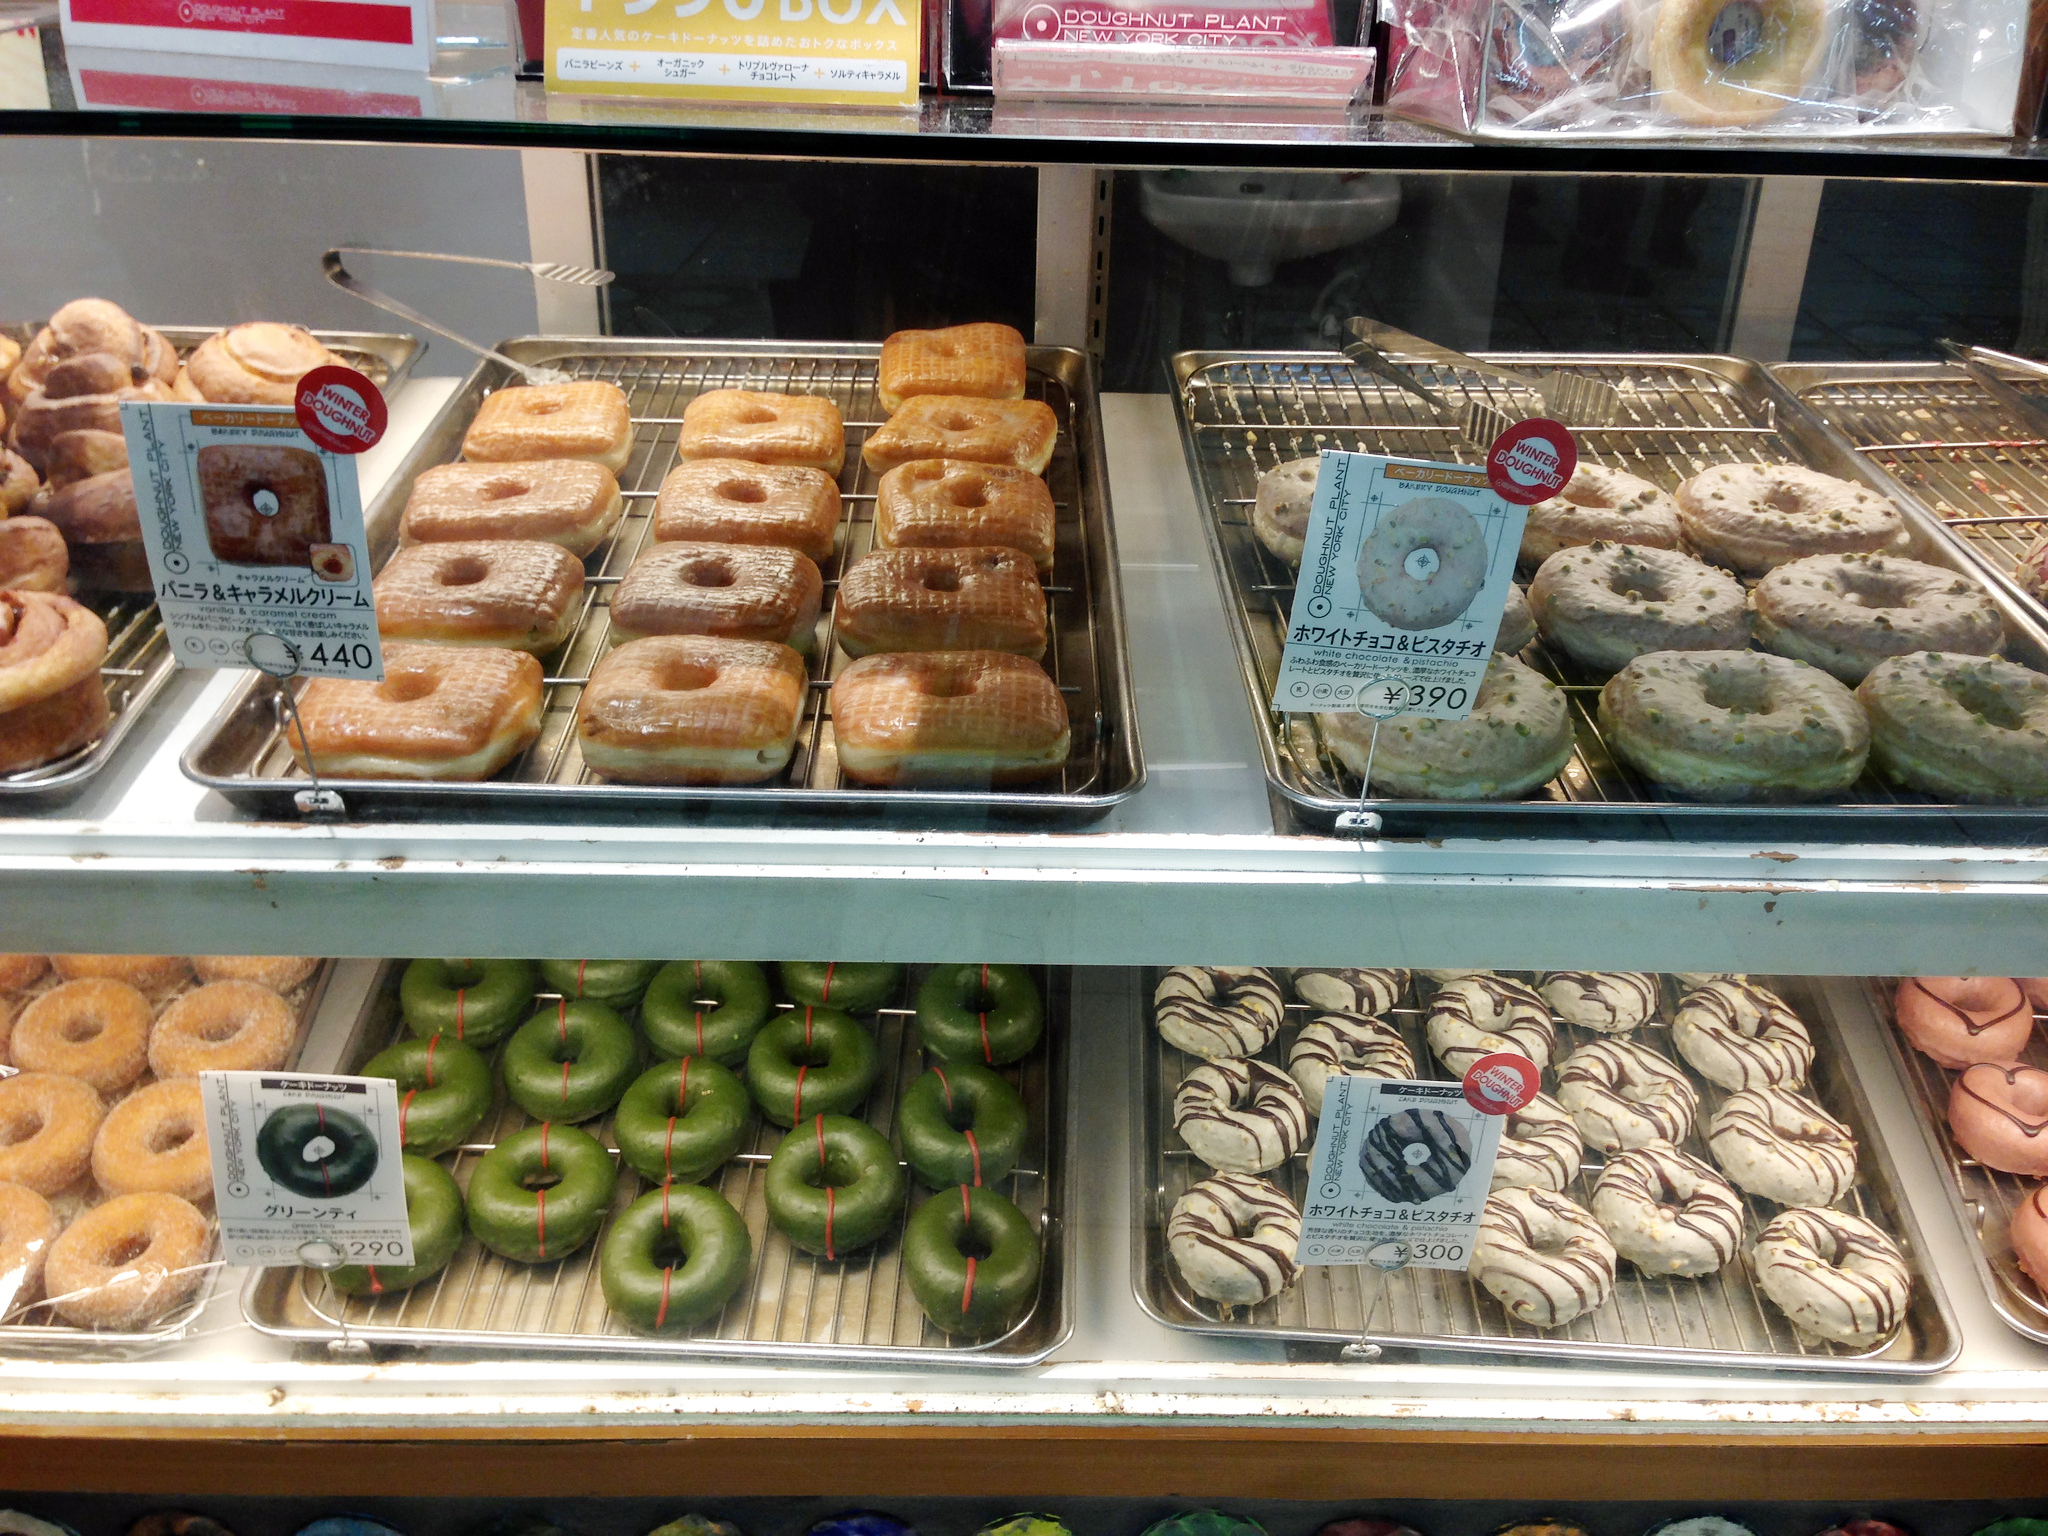 Doughnut display case at Doughnut Plant in Tokyo. Photo by alphacityguides.